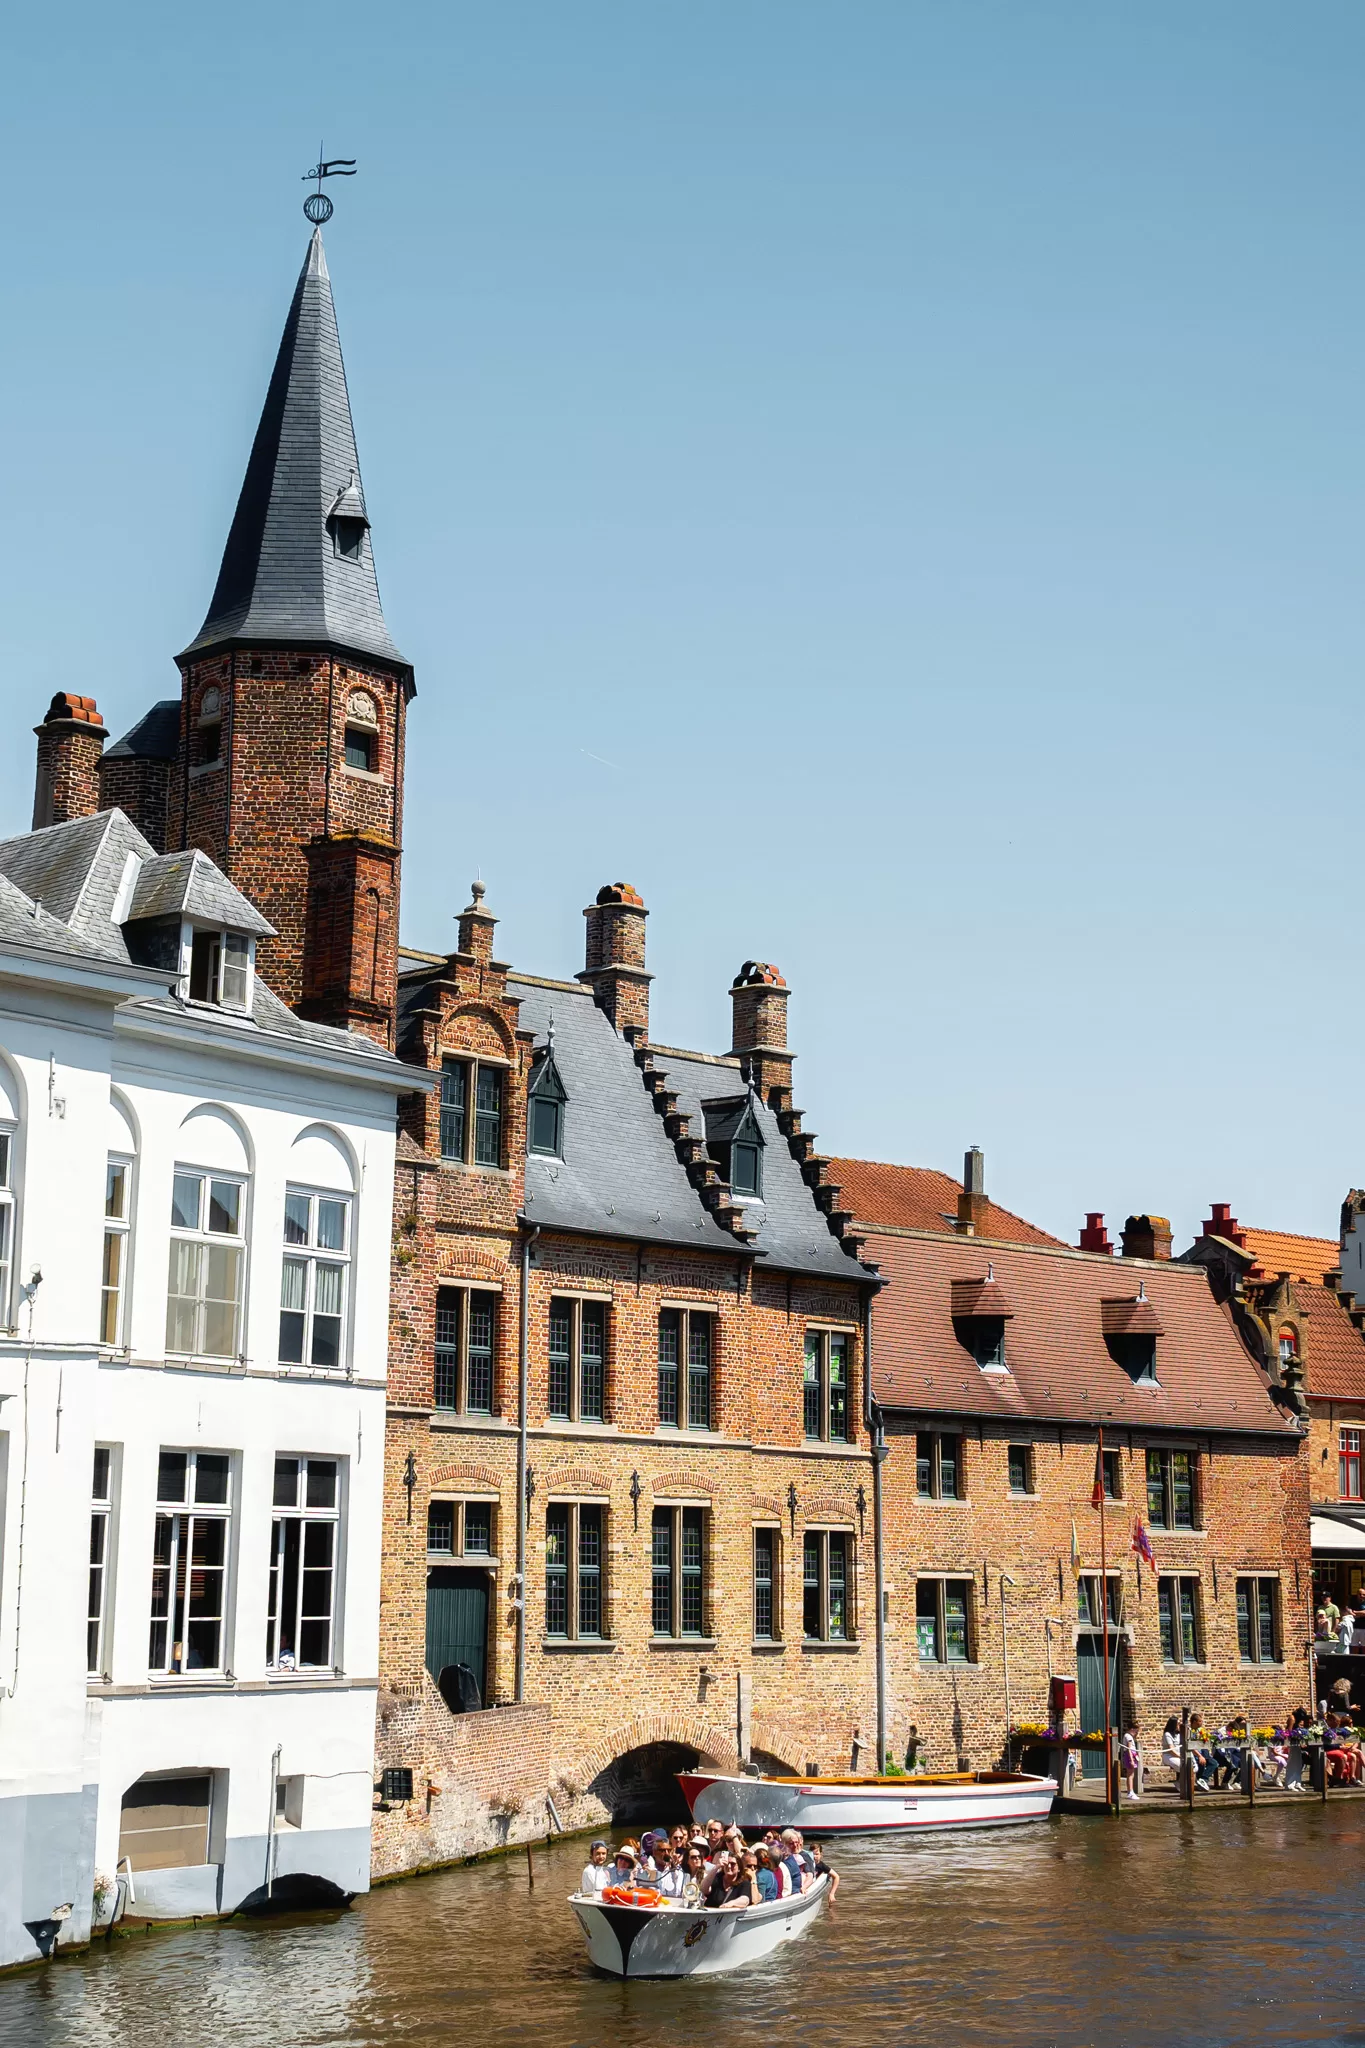 Instagram photo spot in Bruges. It shows historic Buildings in Brugges Belgium